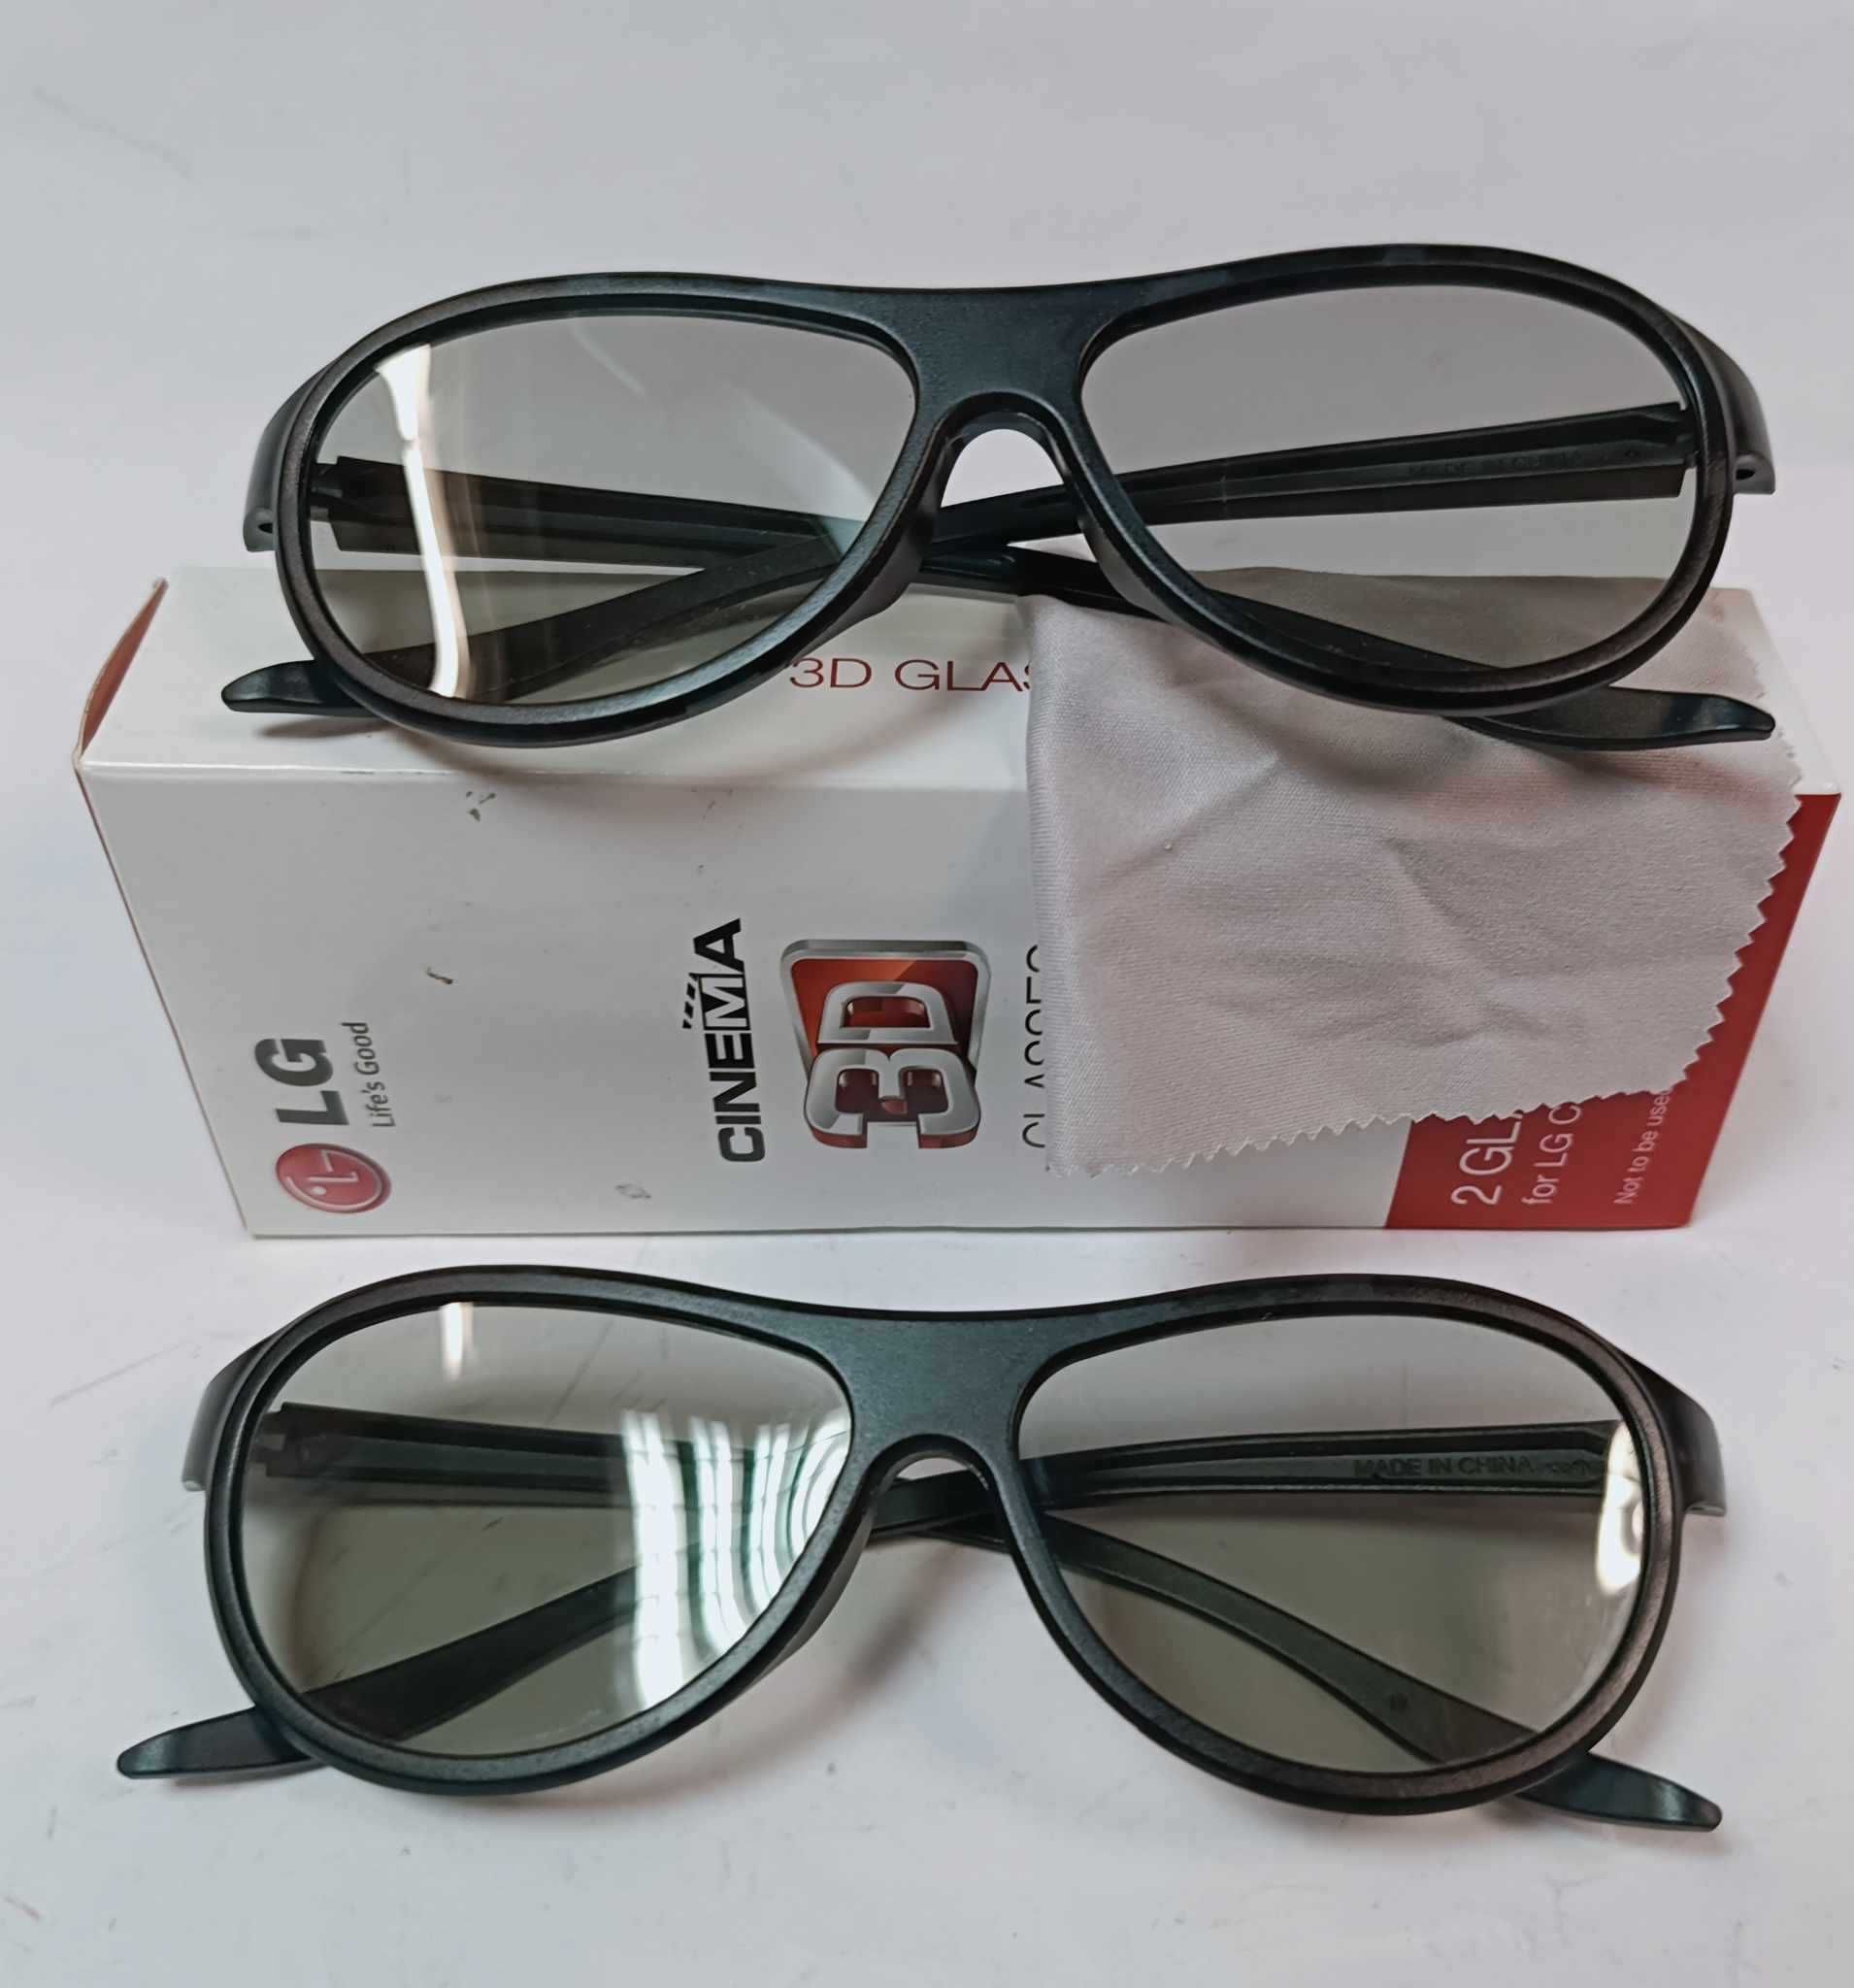 LG cinema AG-F310 2X okulary 3D /SZ